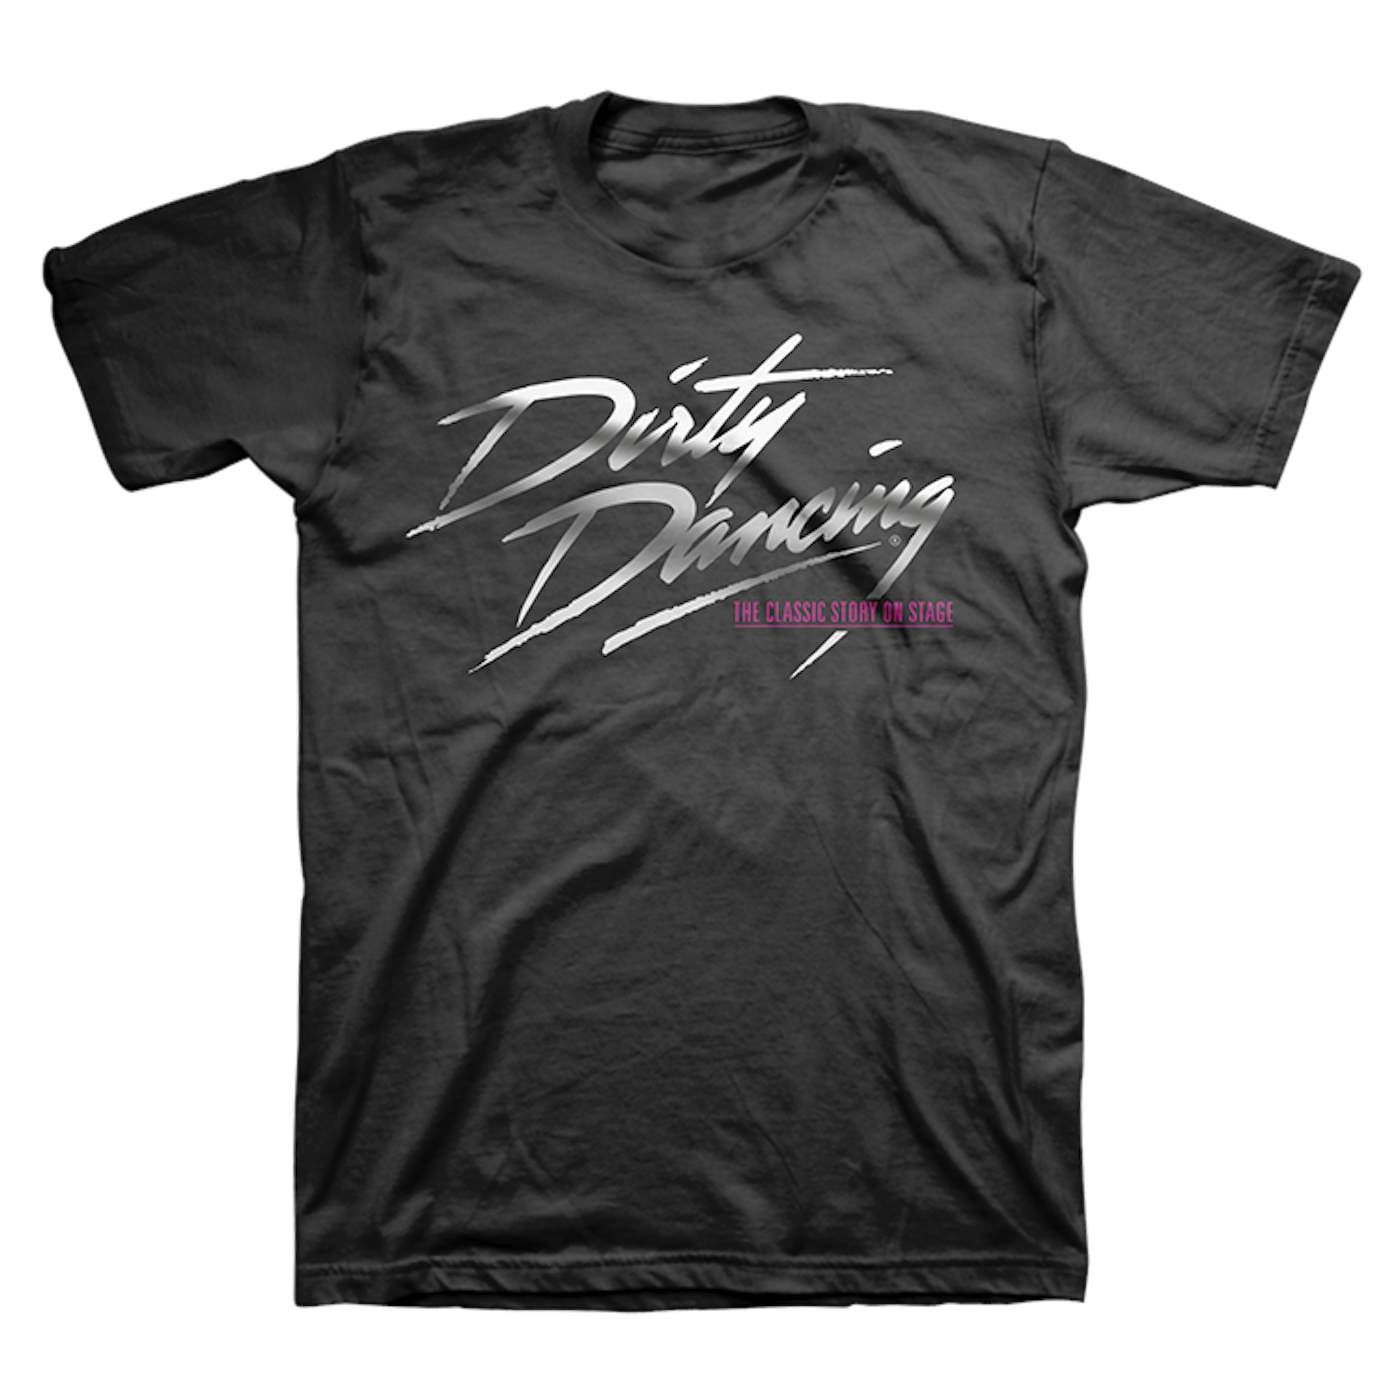 Dirty Dancing Logo Tee